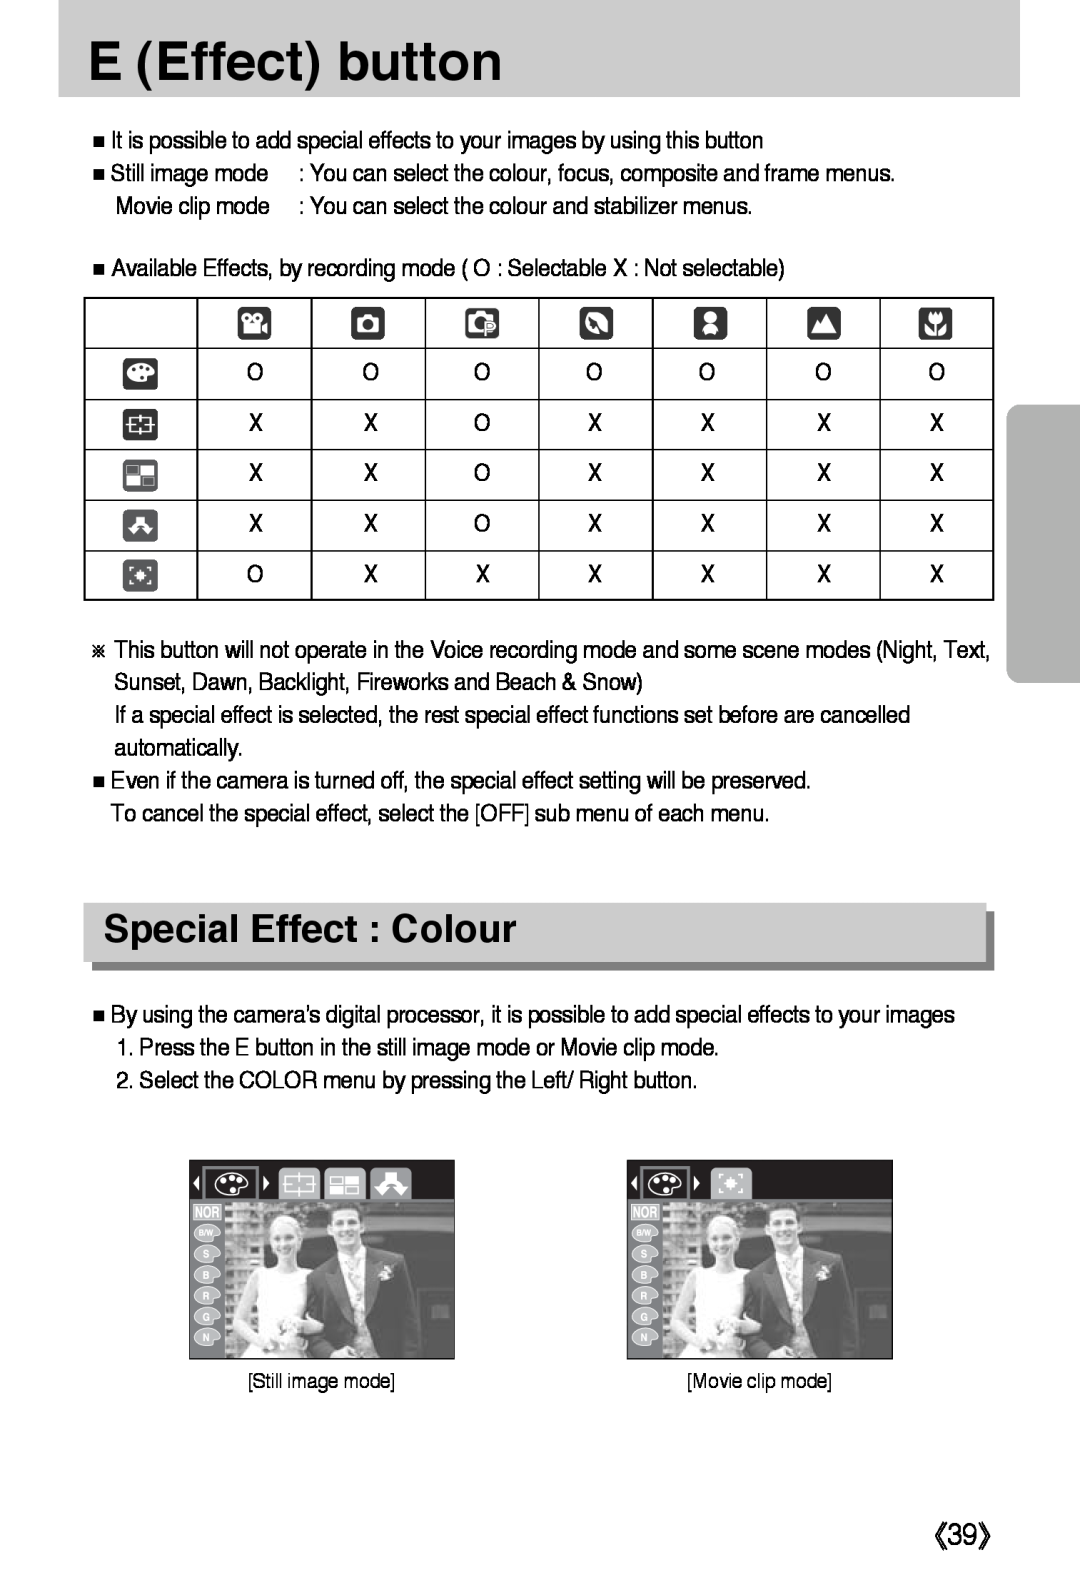 Samsung L50 user manual E Effect button, Special Effect Colour, 《39》 